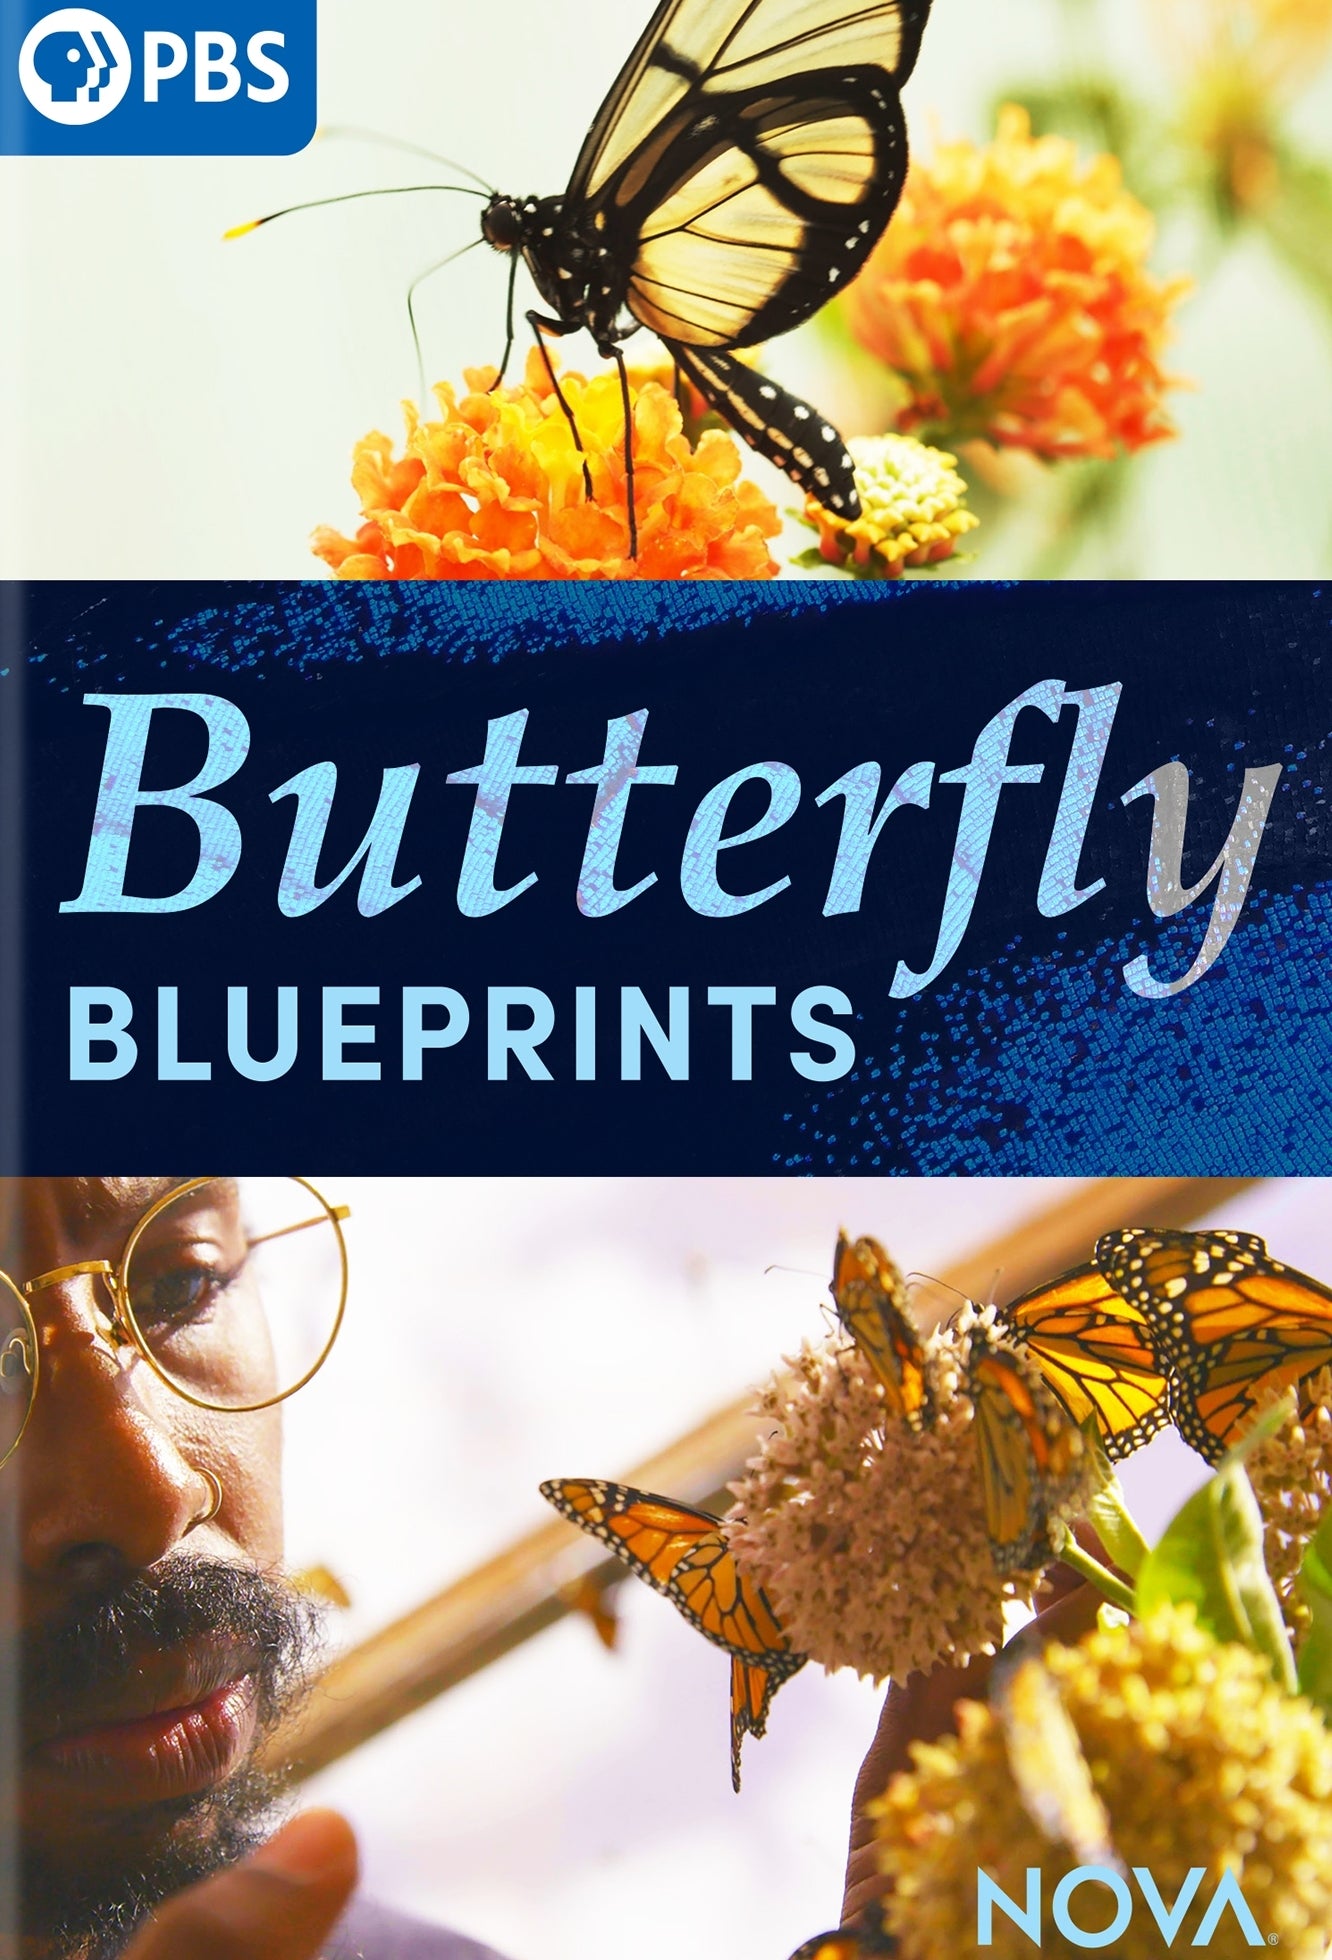 NOVA: Butterfly Blueprints cover art